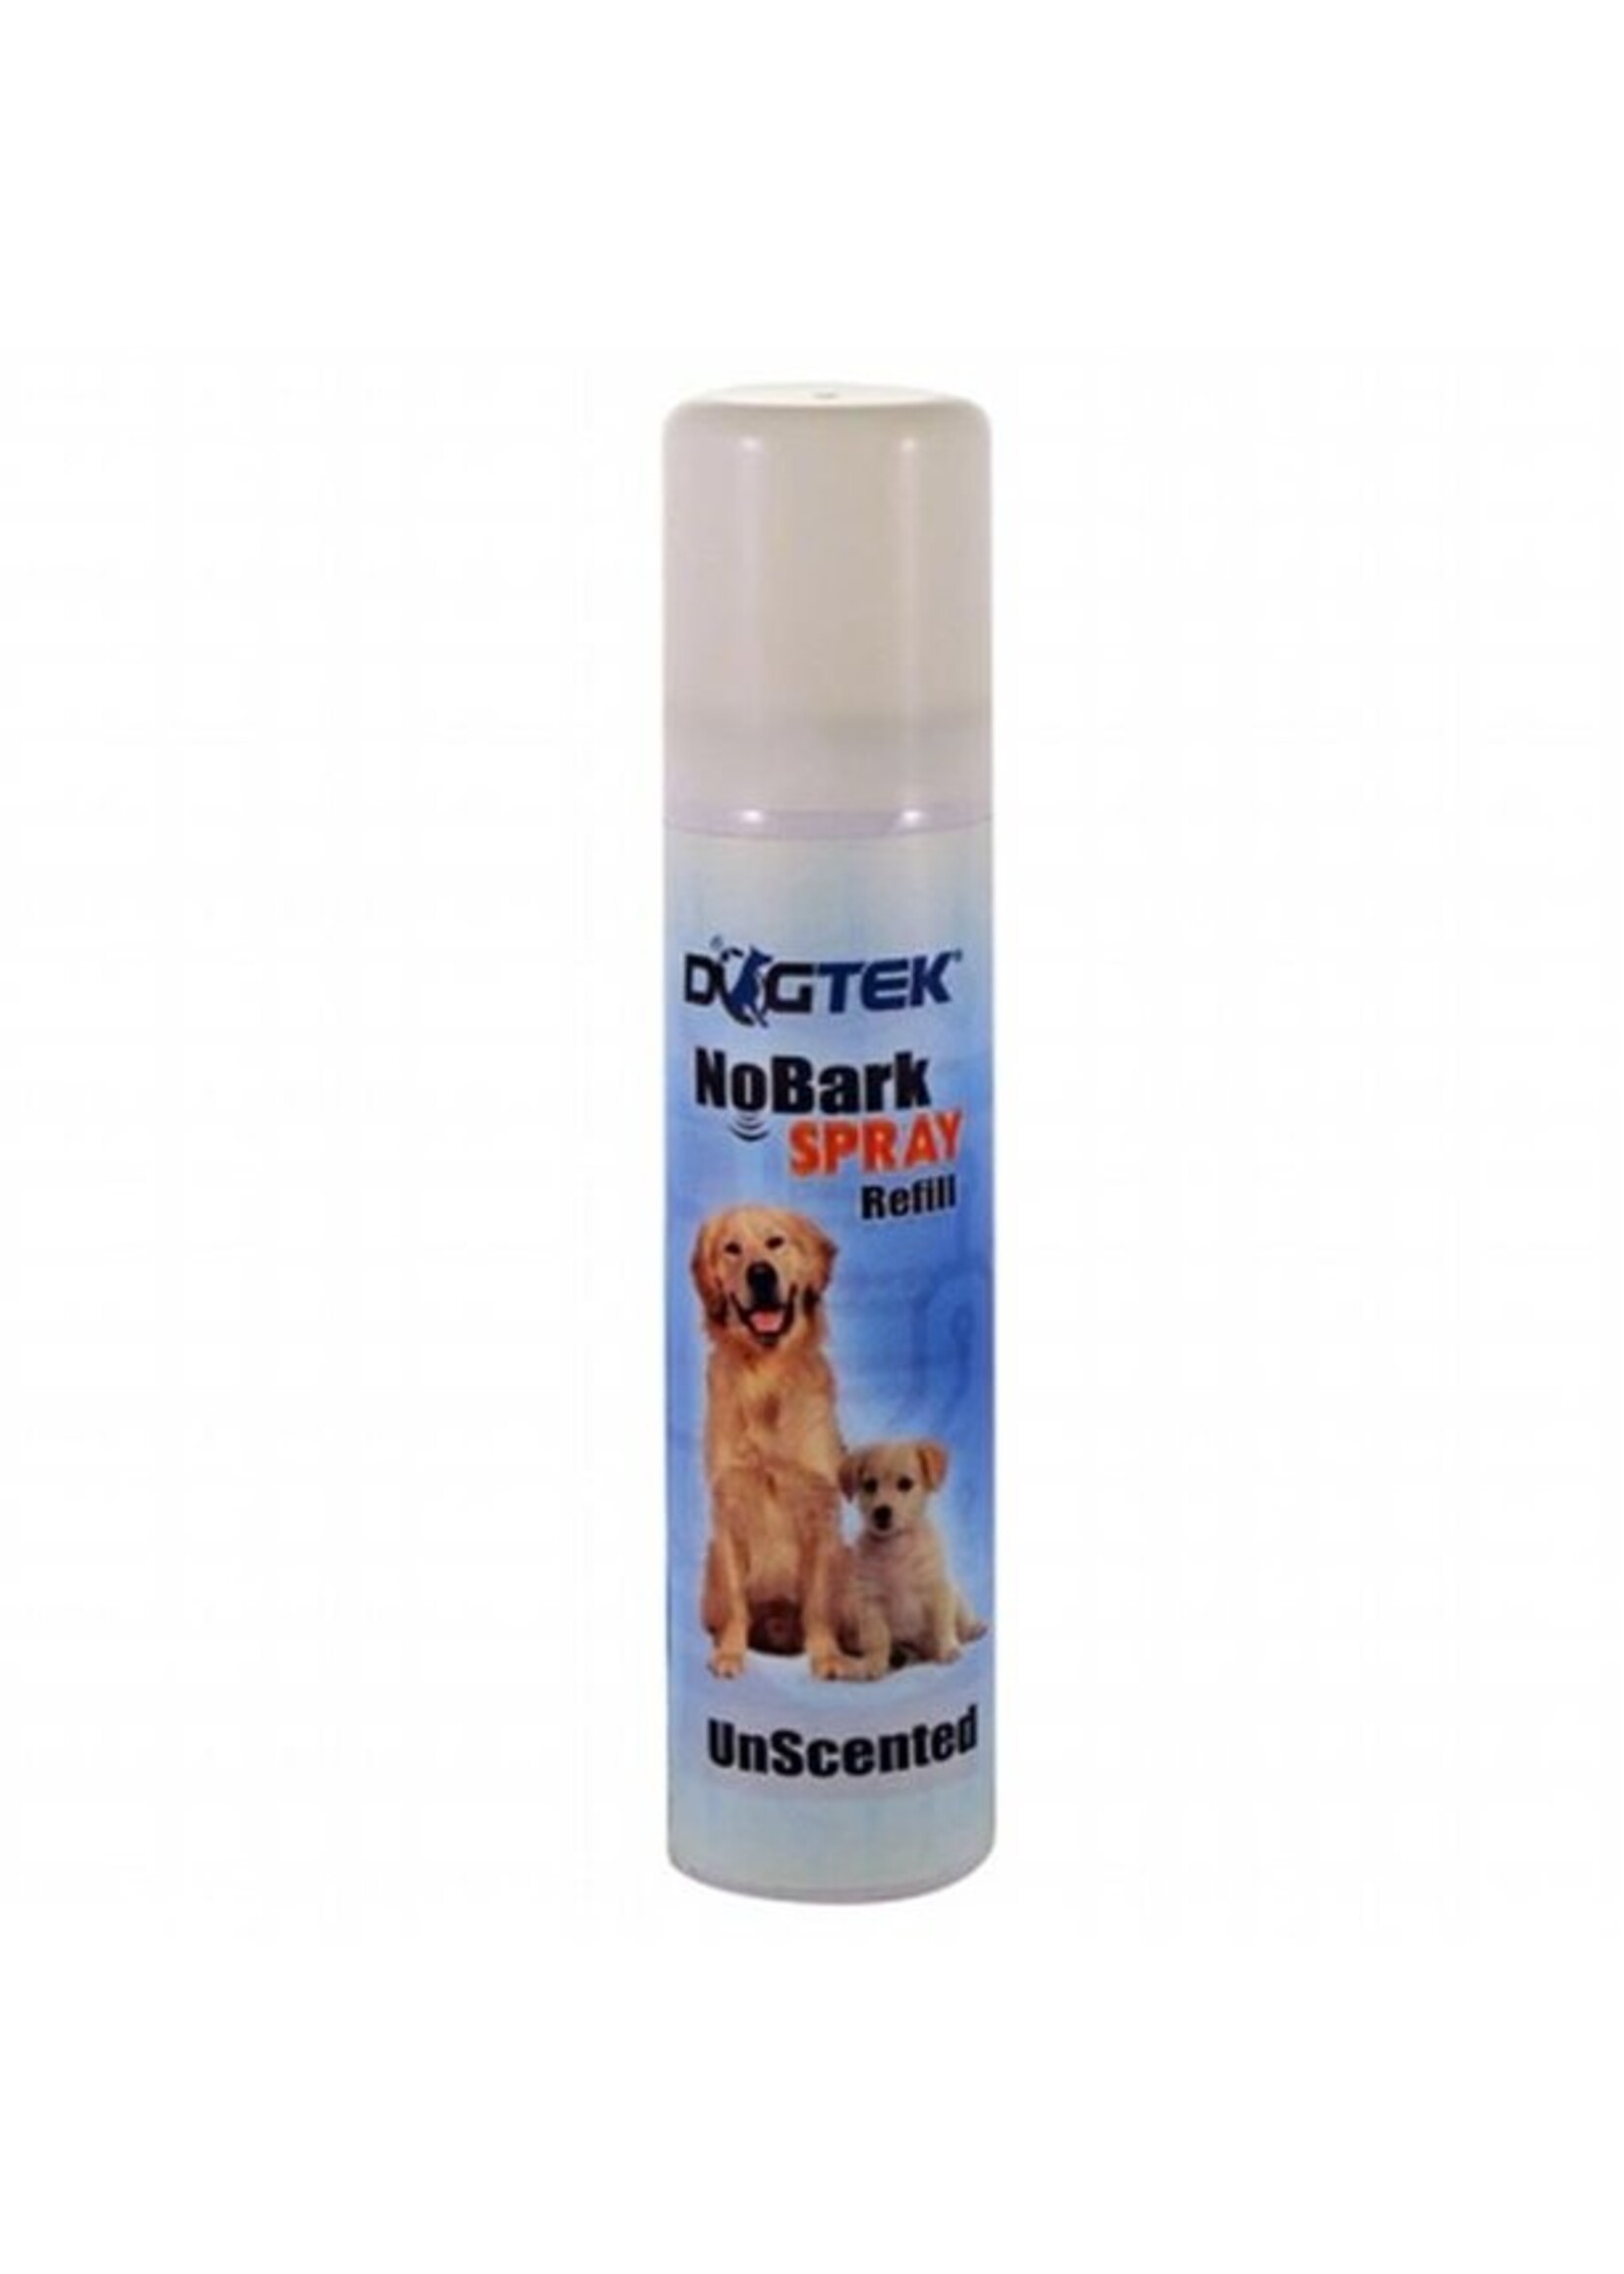 Dogtek Dogtek NoBark Spray Refill Unscented 75ml